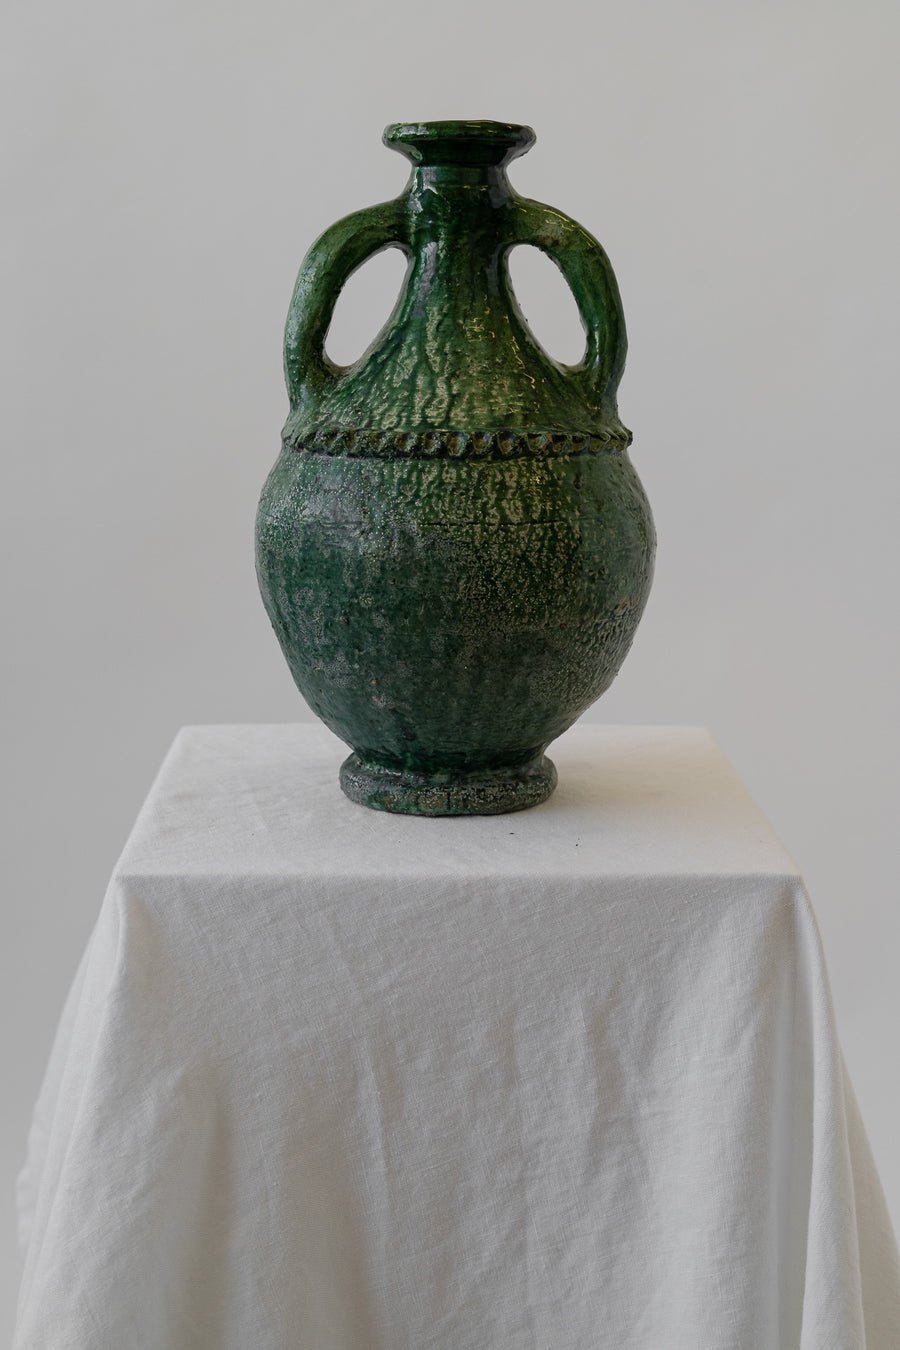 Glazed Green Vase with Handles